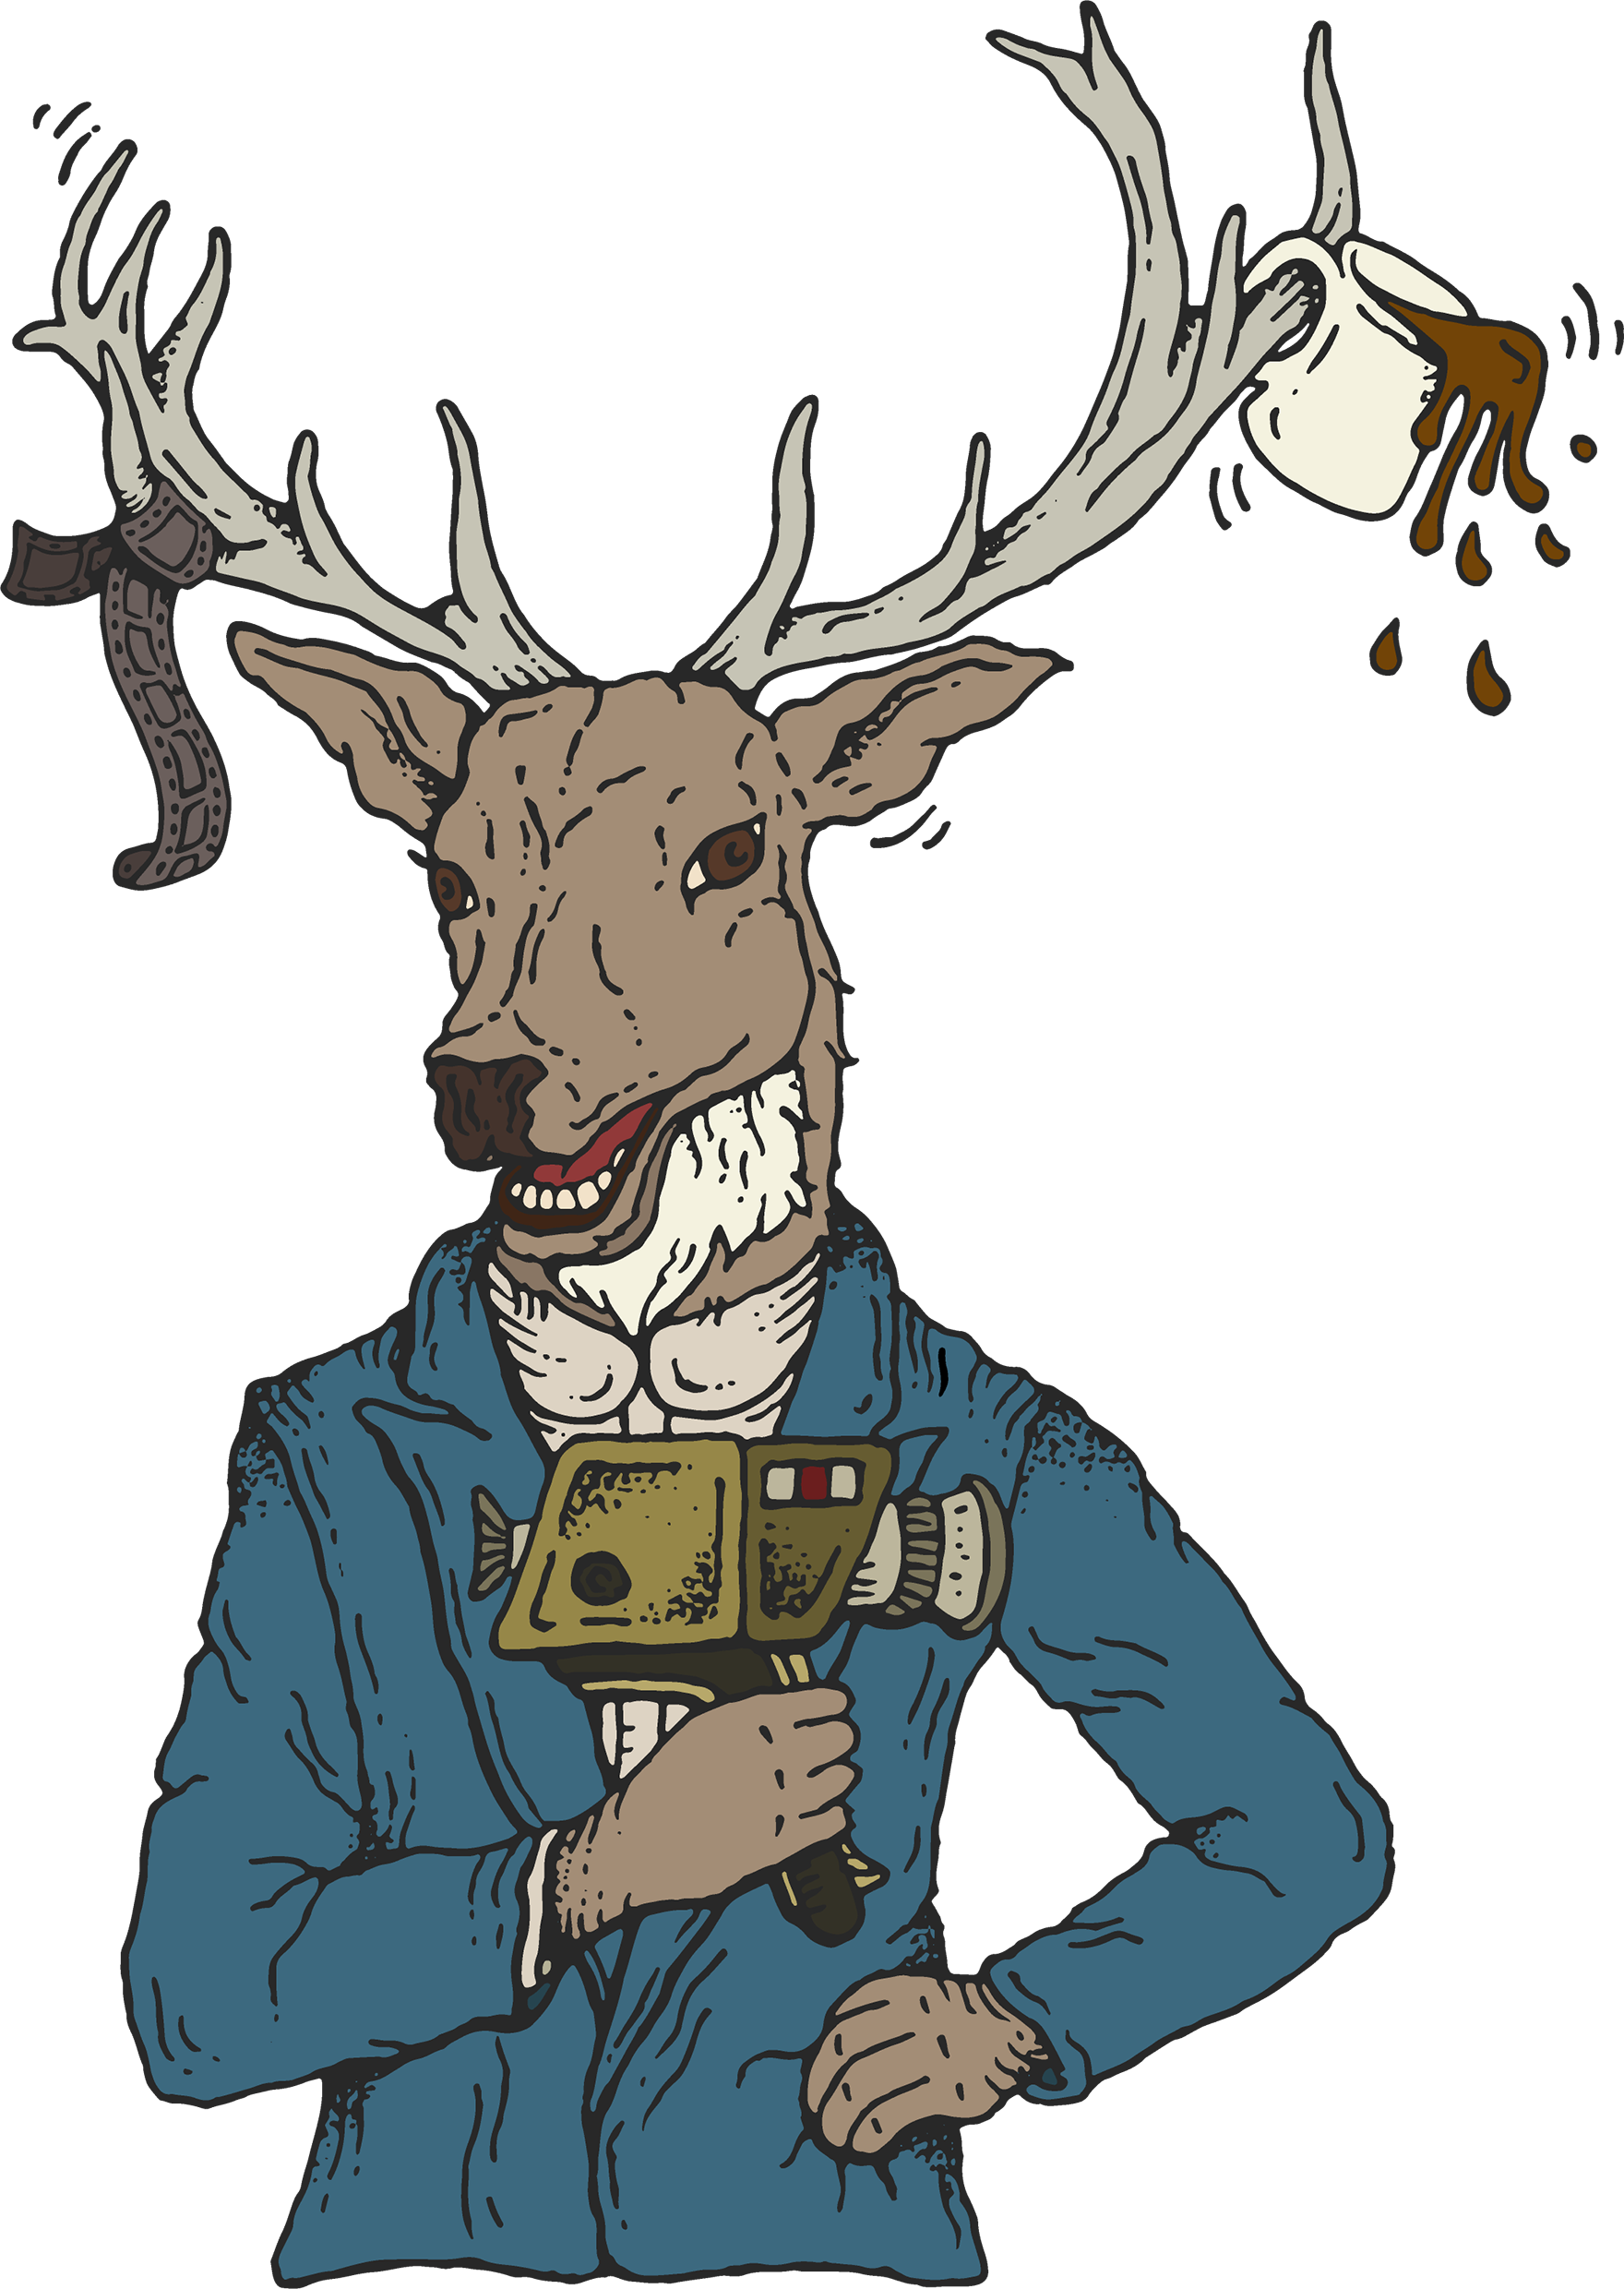 Deer Logo Illustration